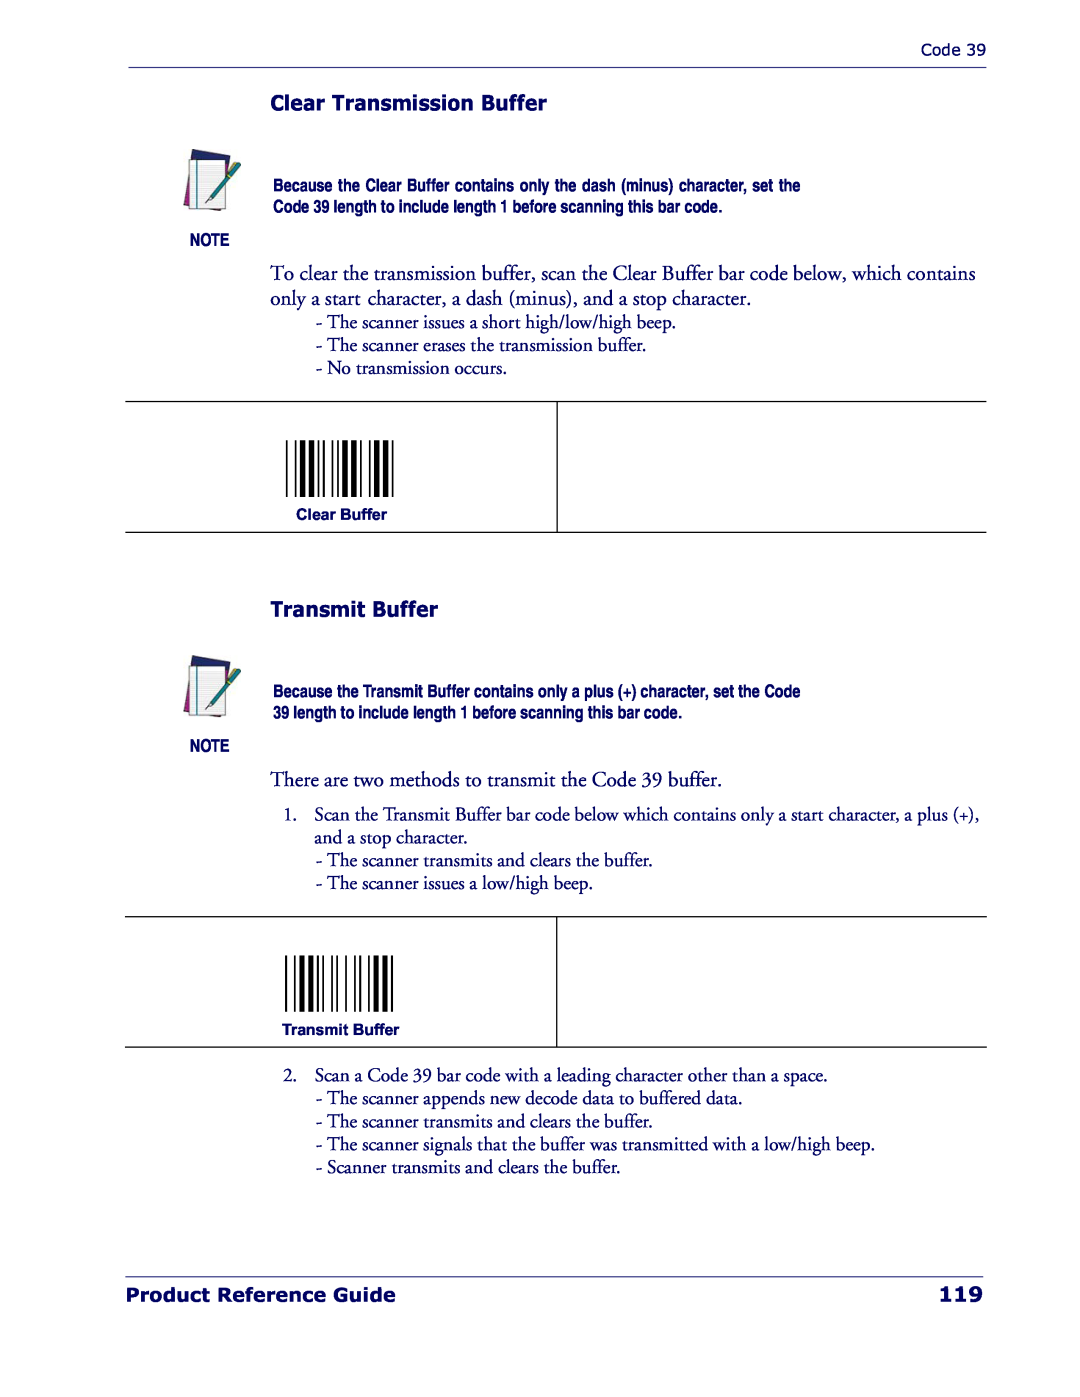 Datalogic Scanning QD 2300 manual Clear Transmission Buffer, Transmit Buffer, Product Reference Guide 